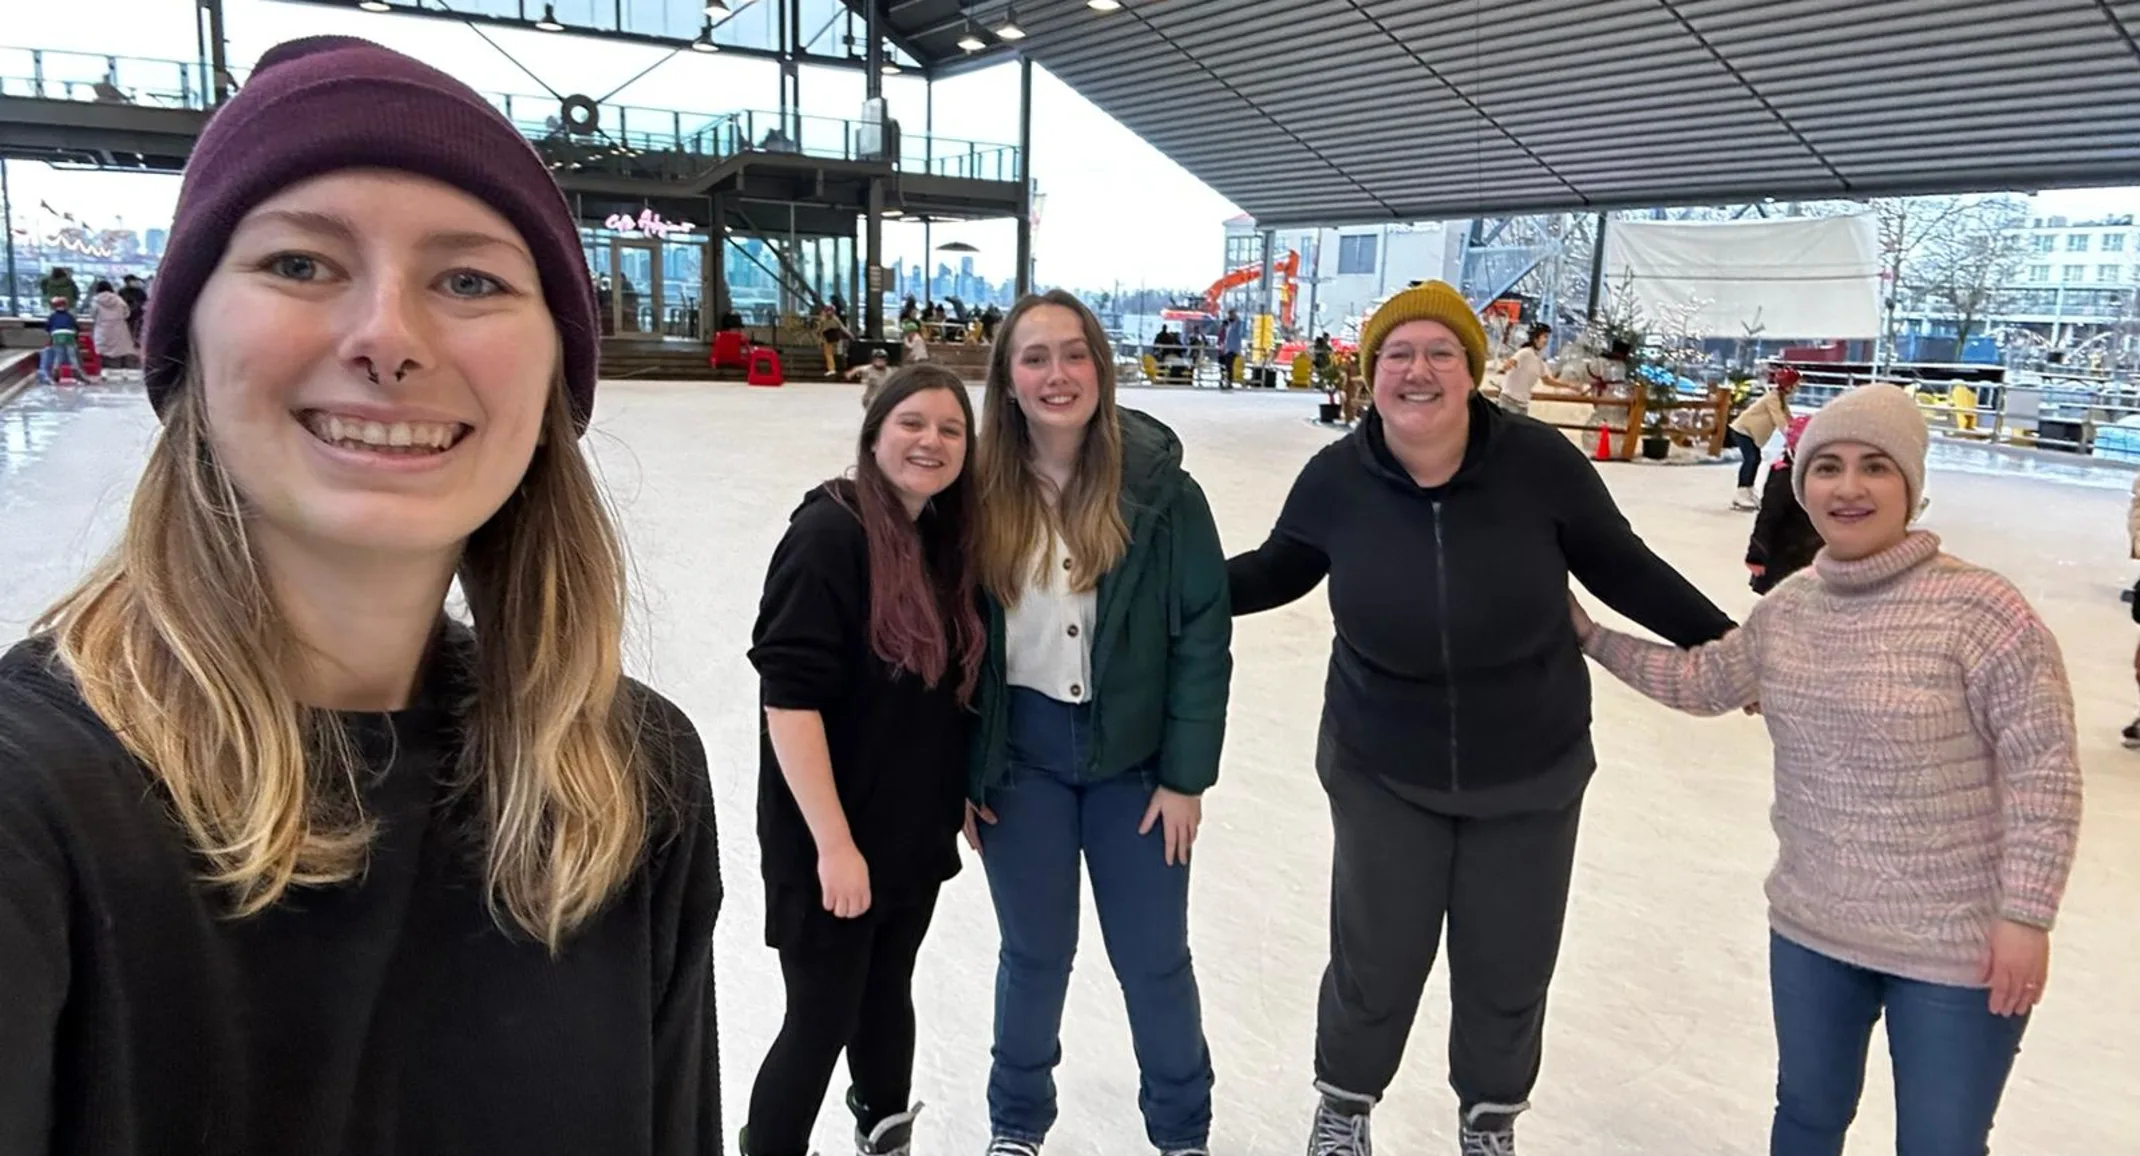 Staff selfie at a ice skating rink